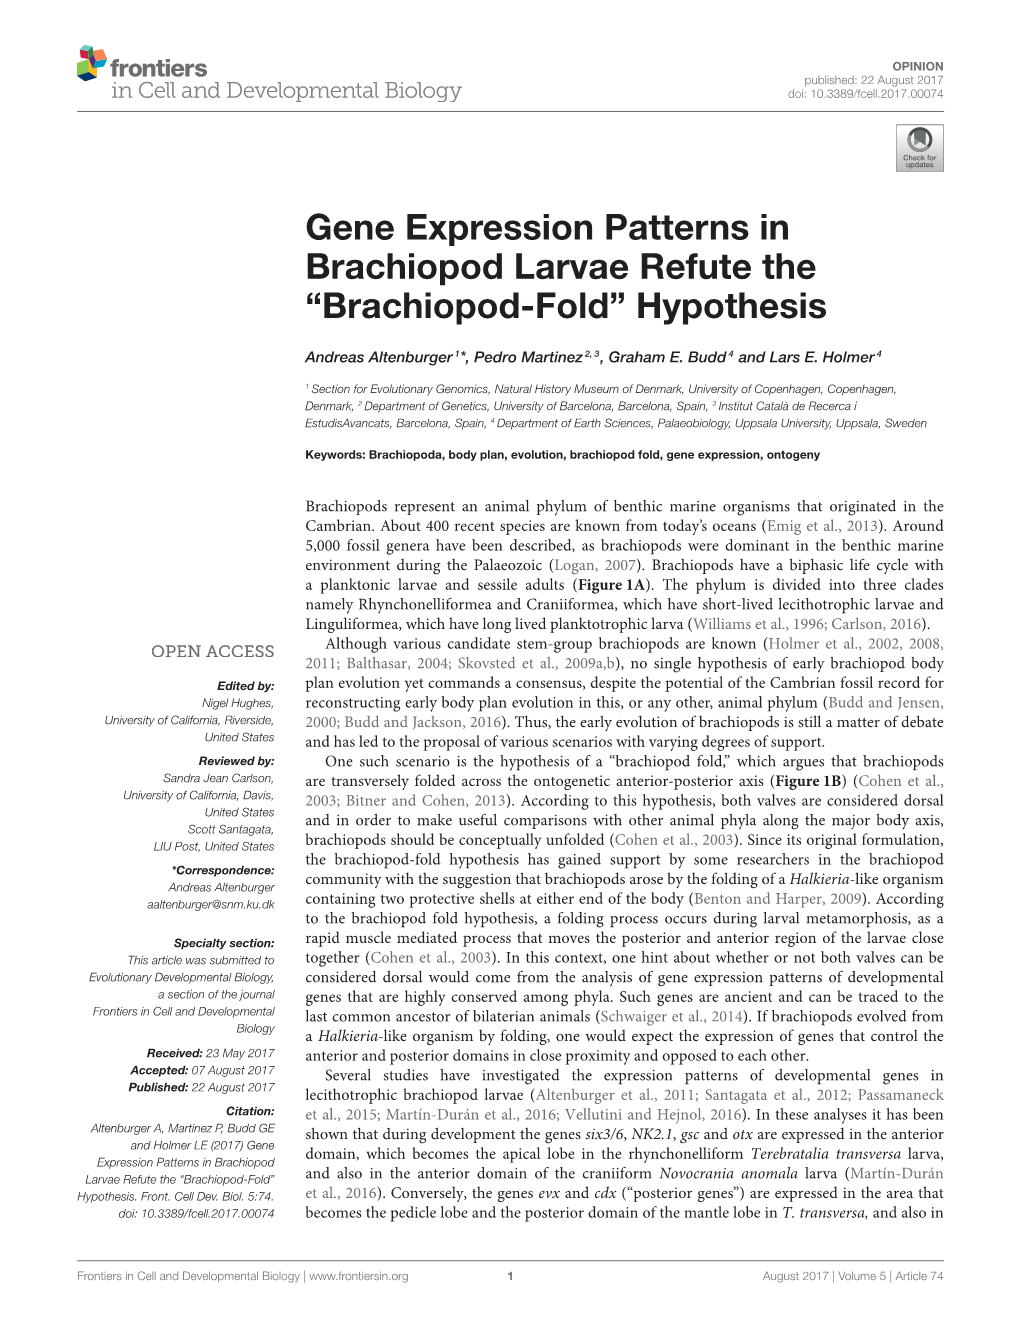 Gene Expression Patterns in Brachiopod Larvae Refute the “Brachiopod-Fold” Hypothesis